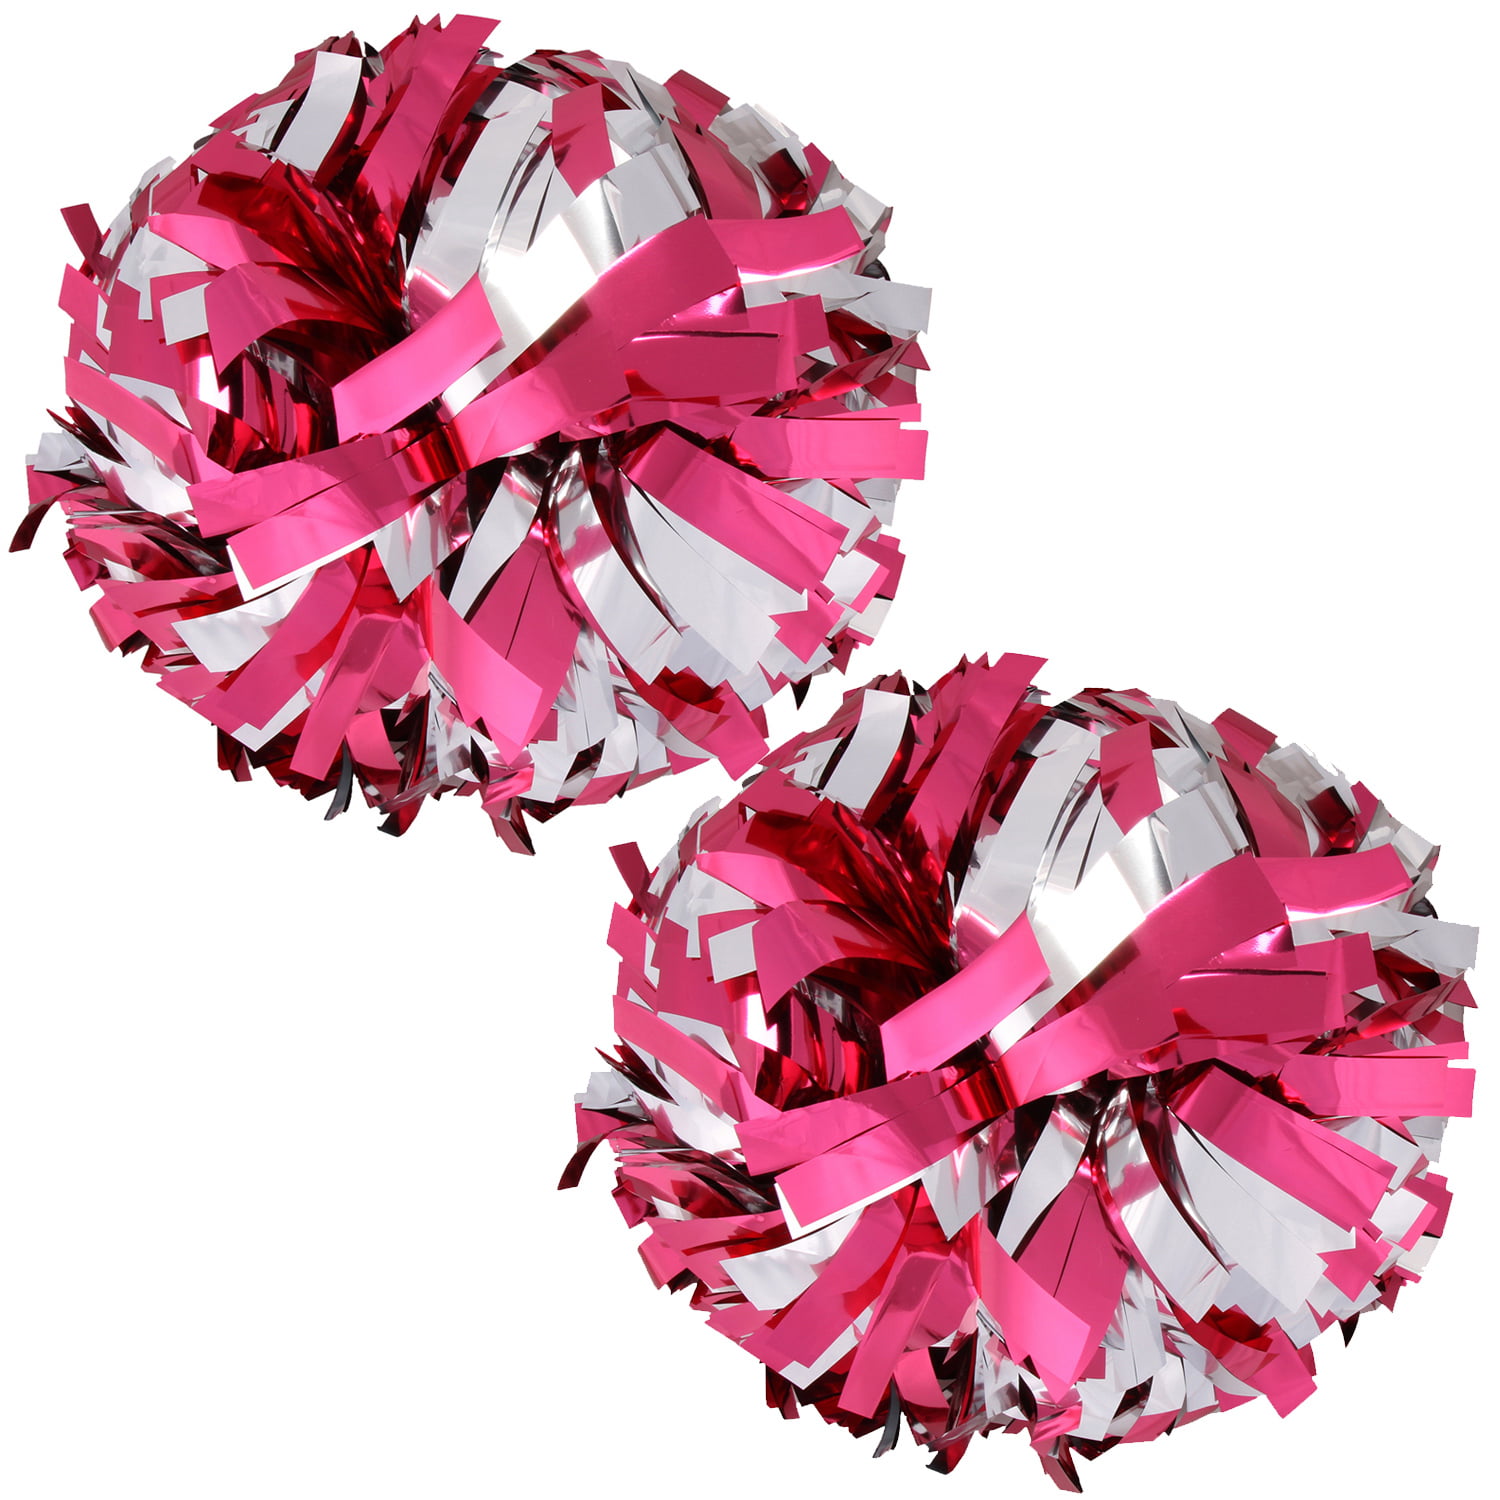 2PCS Pink Silver Pom Poms Cheerleading Cheerleader Cheer Dance Party Club Decor 